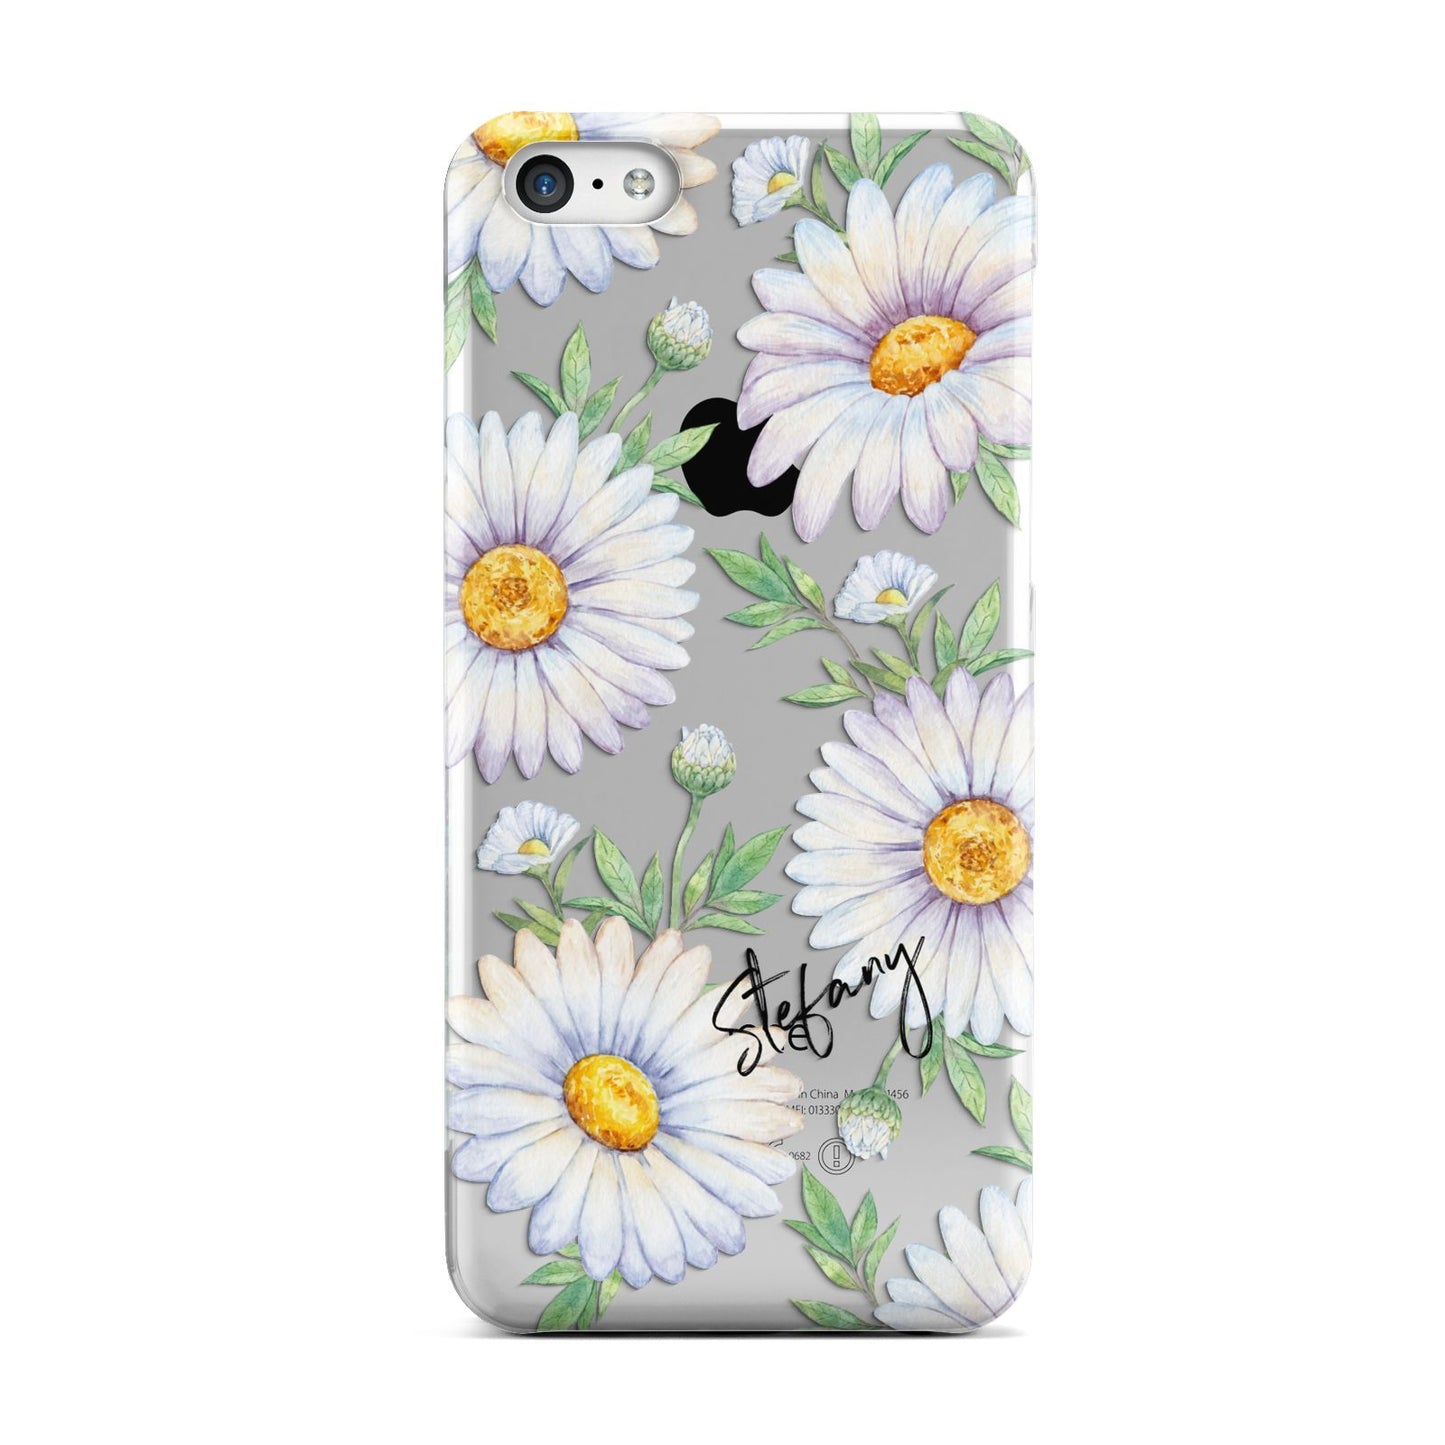 Personalised White Daisy Apple iPhone 5c Case